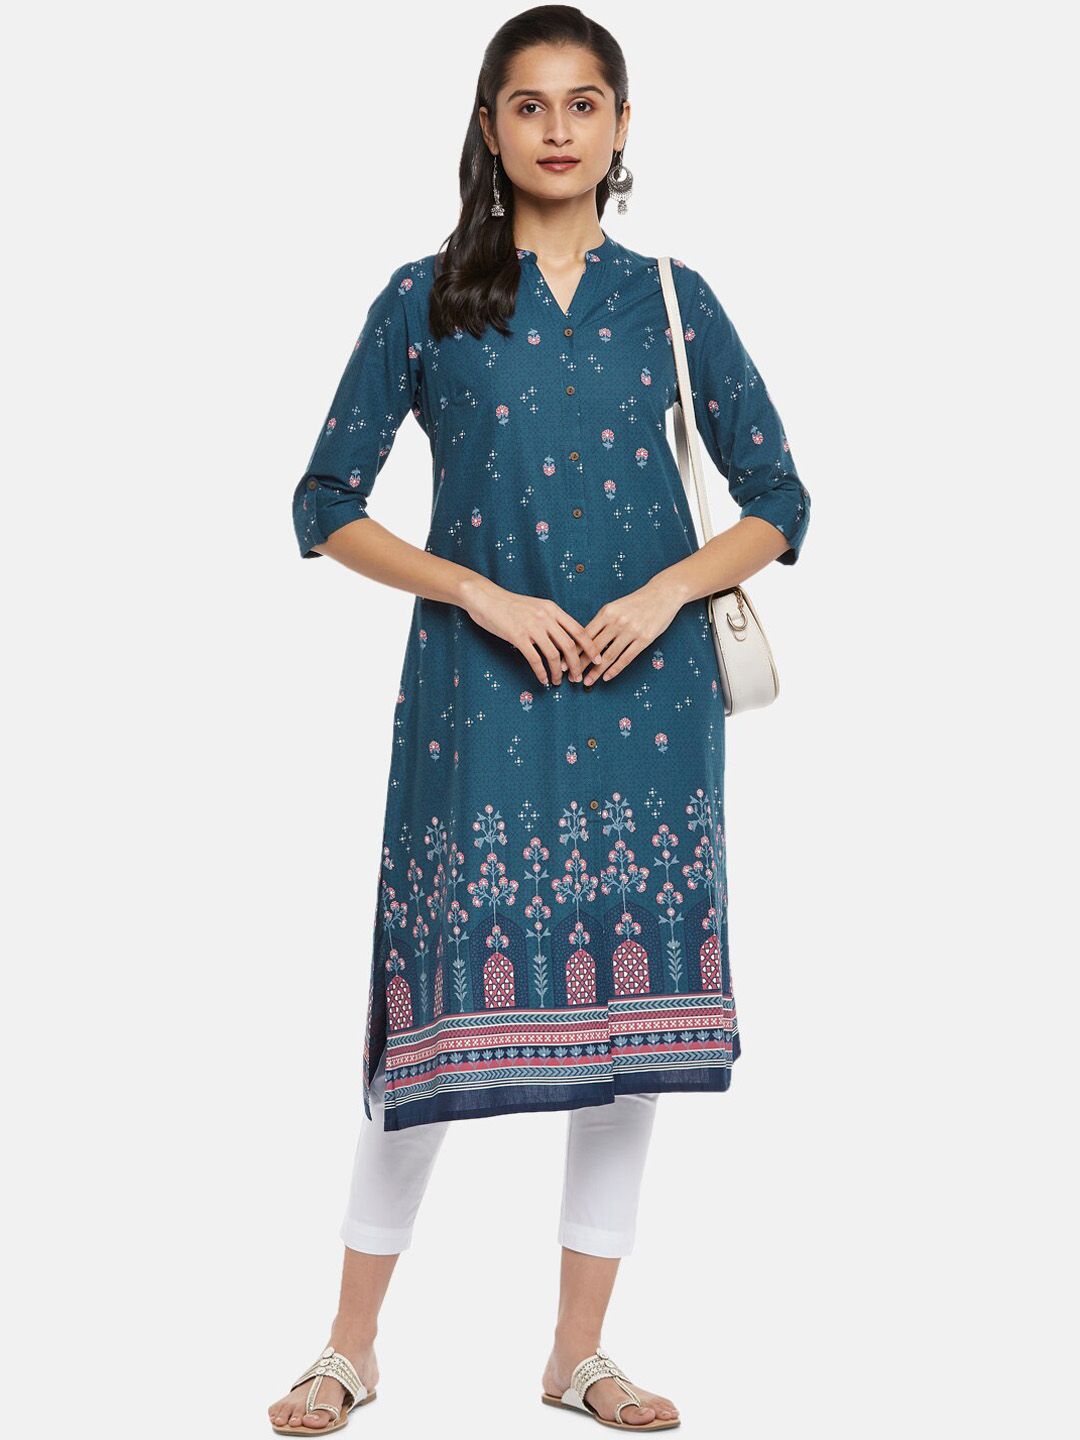 RANGMANCH BY PANTALOONS Women Blue Ethnic Motifs Embroidered Kurta Price in India